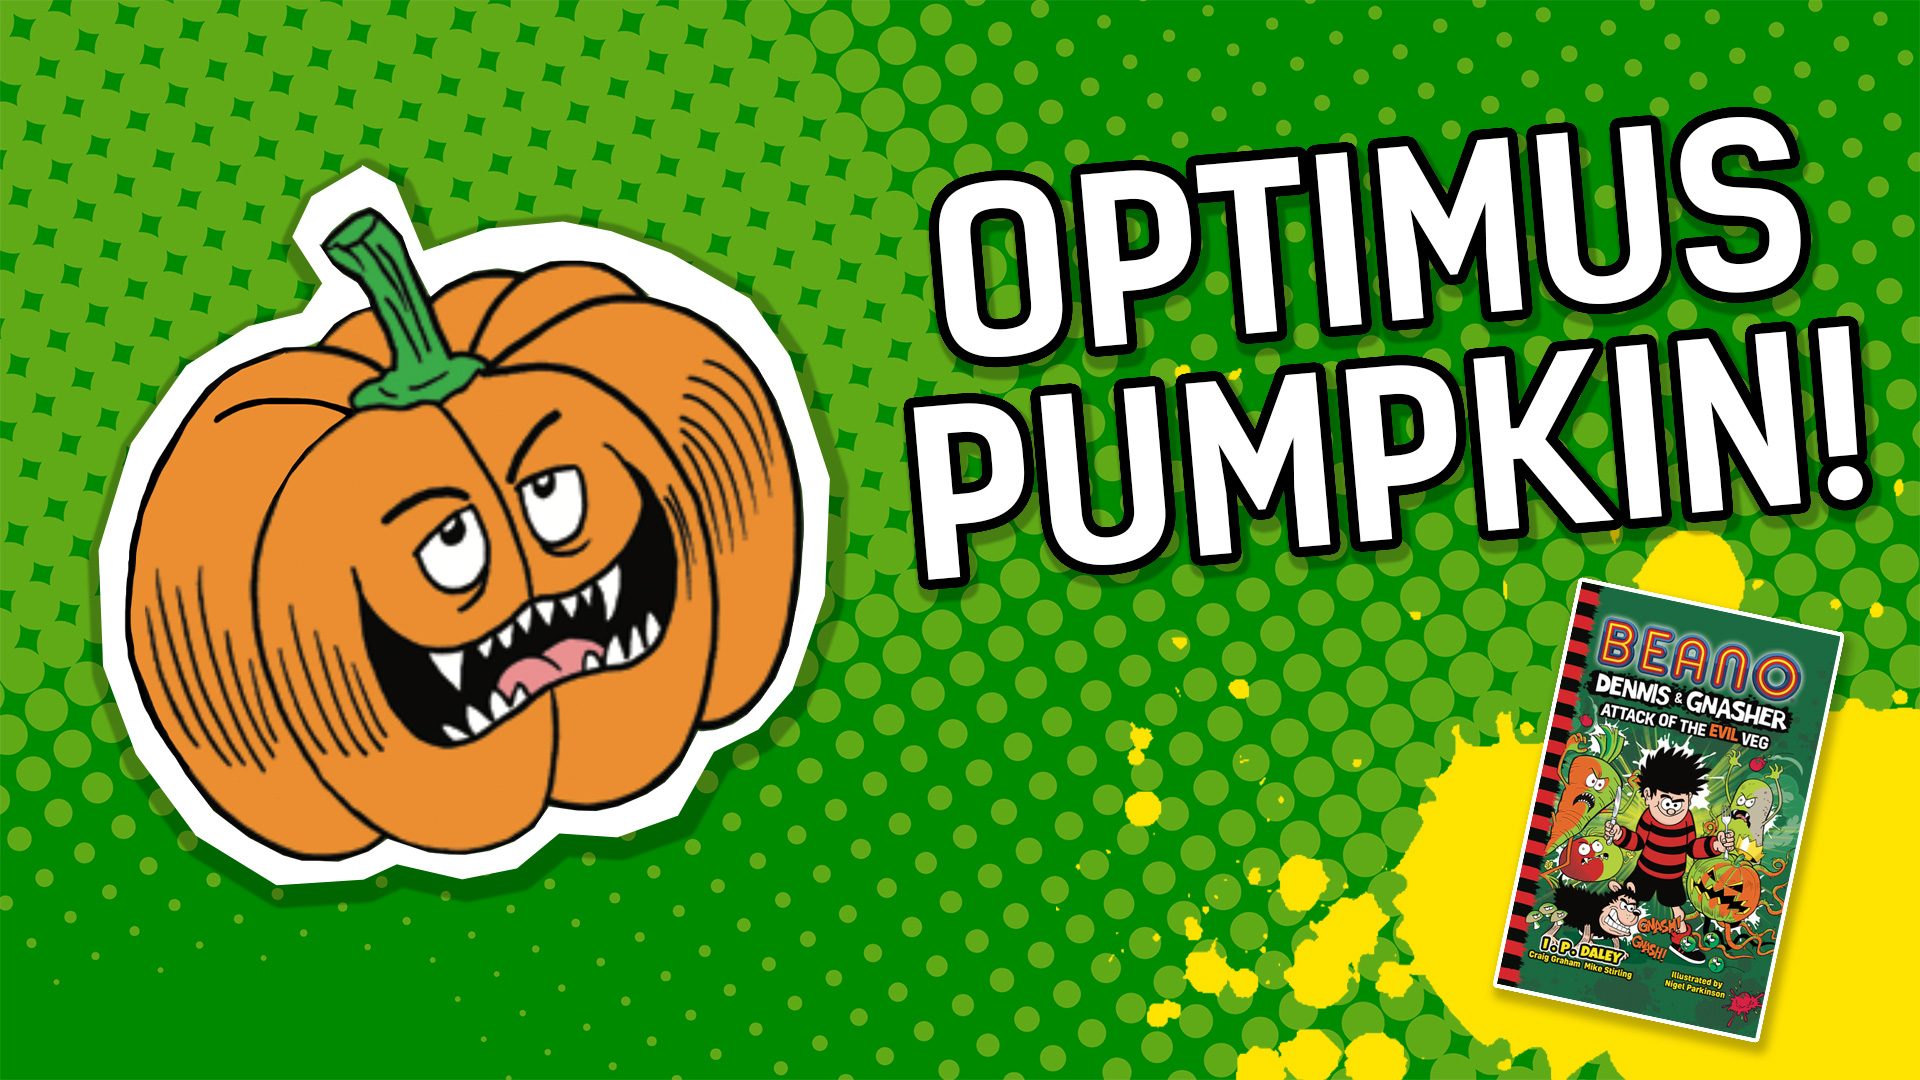 Result: Optimus Pumpkin